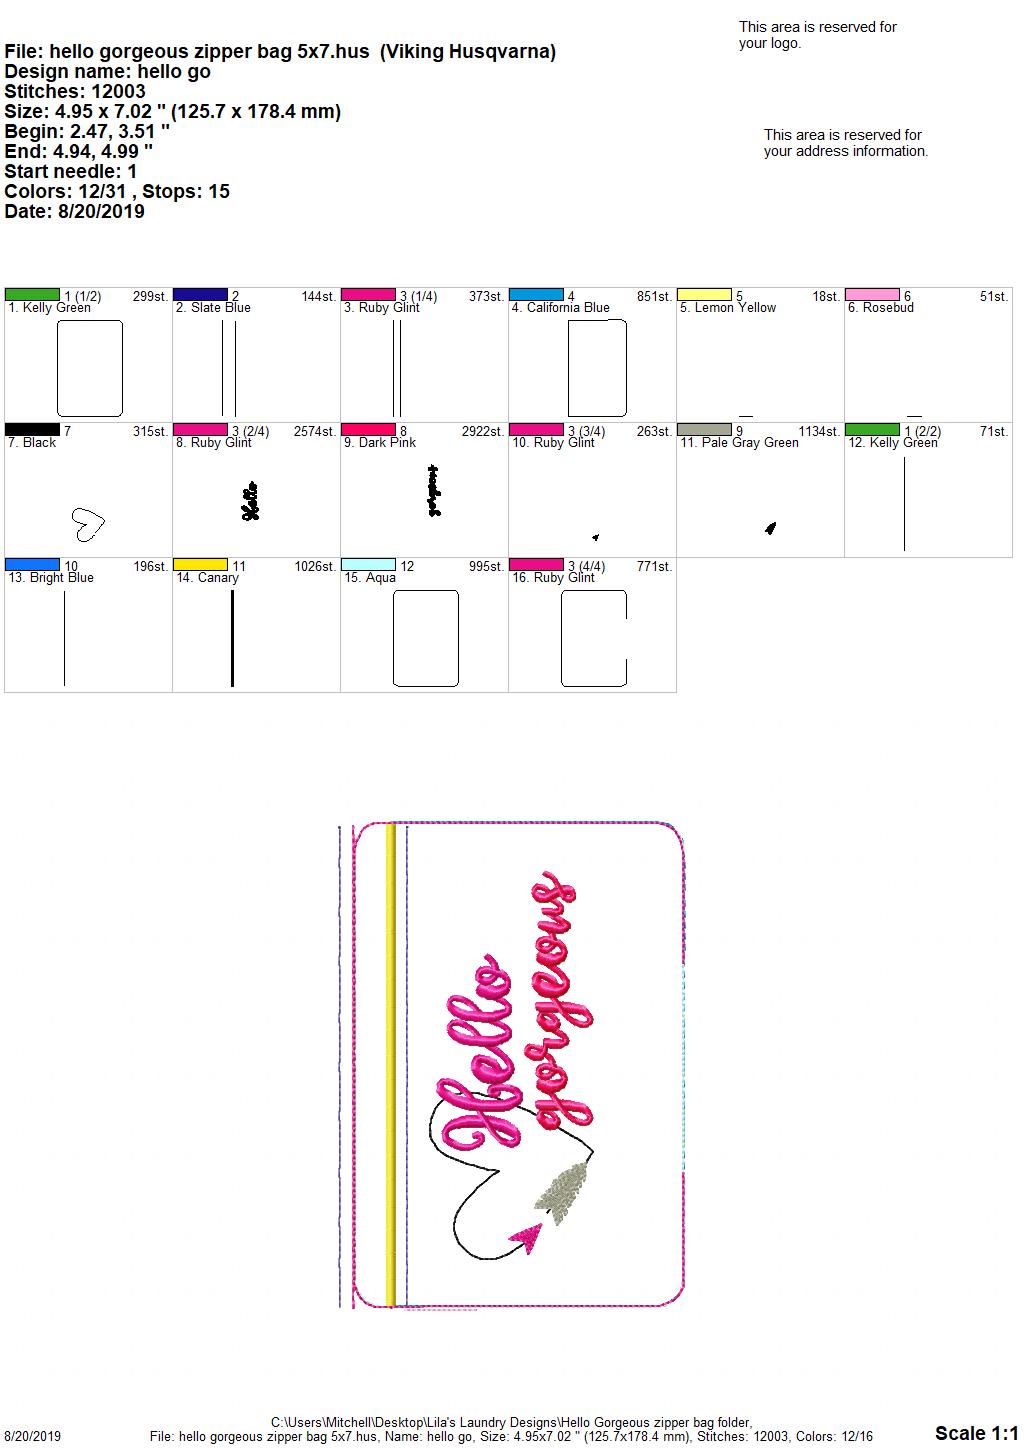 Hello Gorgeous Zipper Bag - 2 sizes - Digital Embroidery Design